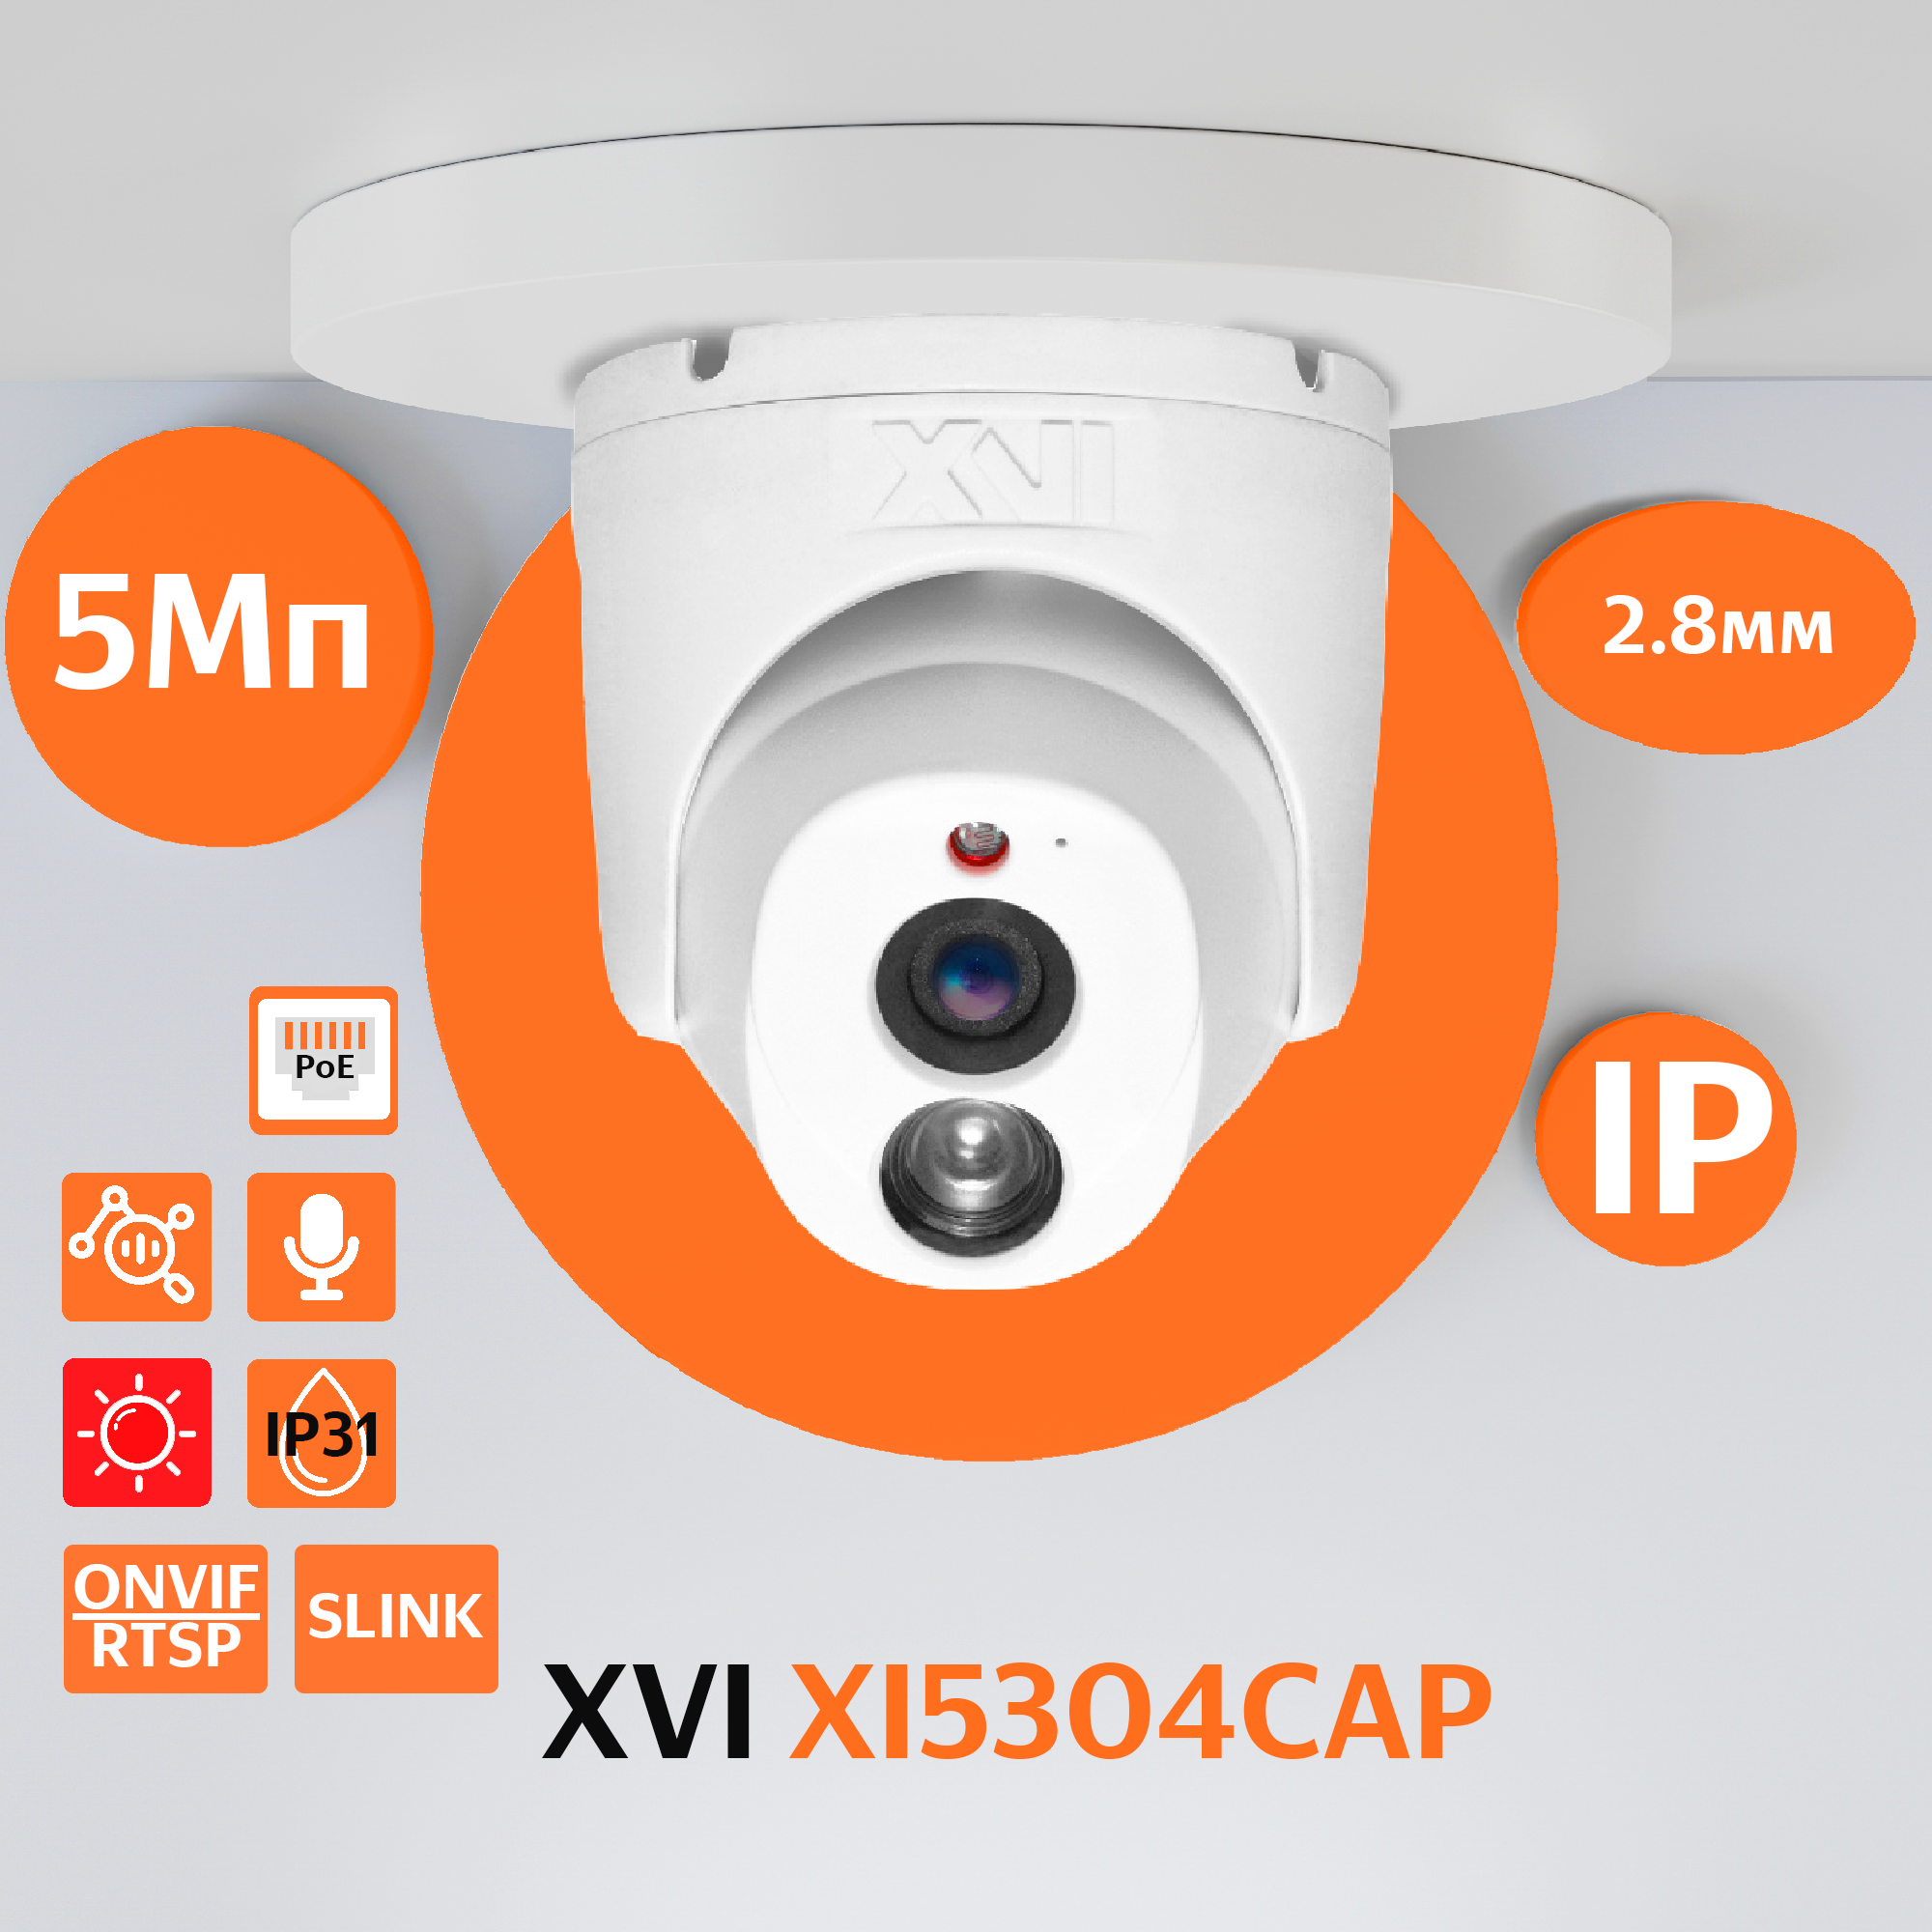 Купольная IP камера XVI XI5304CAP2.8, 5Мп, фикс.объектив, встр.мкрф, PoE, ИК f= 2.8мм